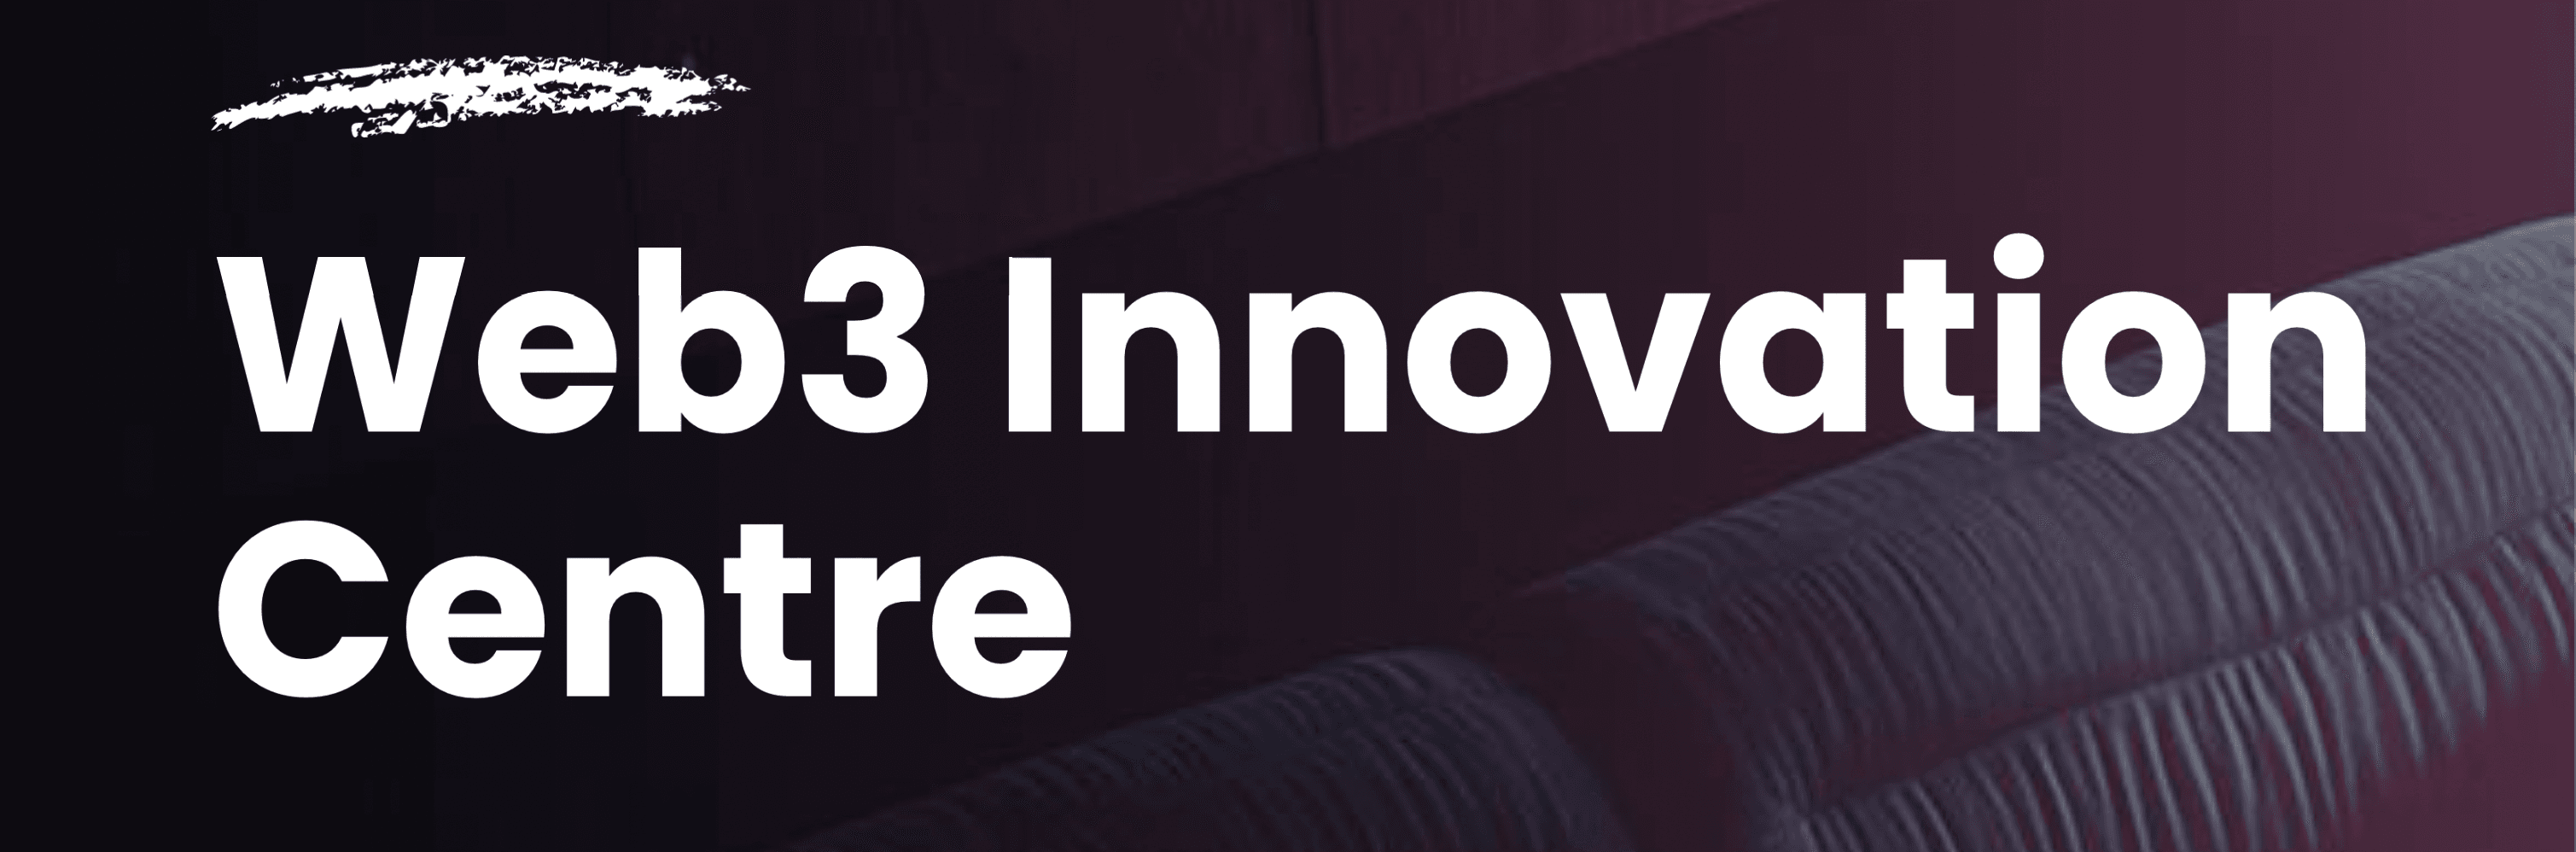 web3_innovation 横幅